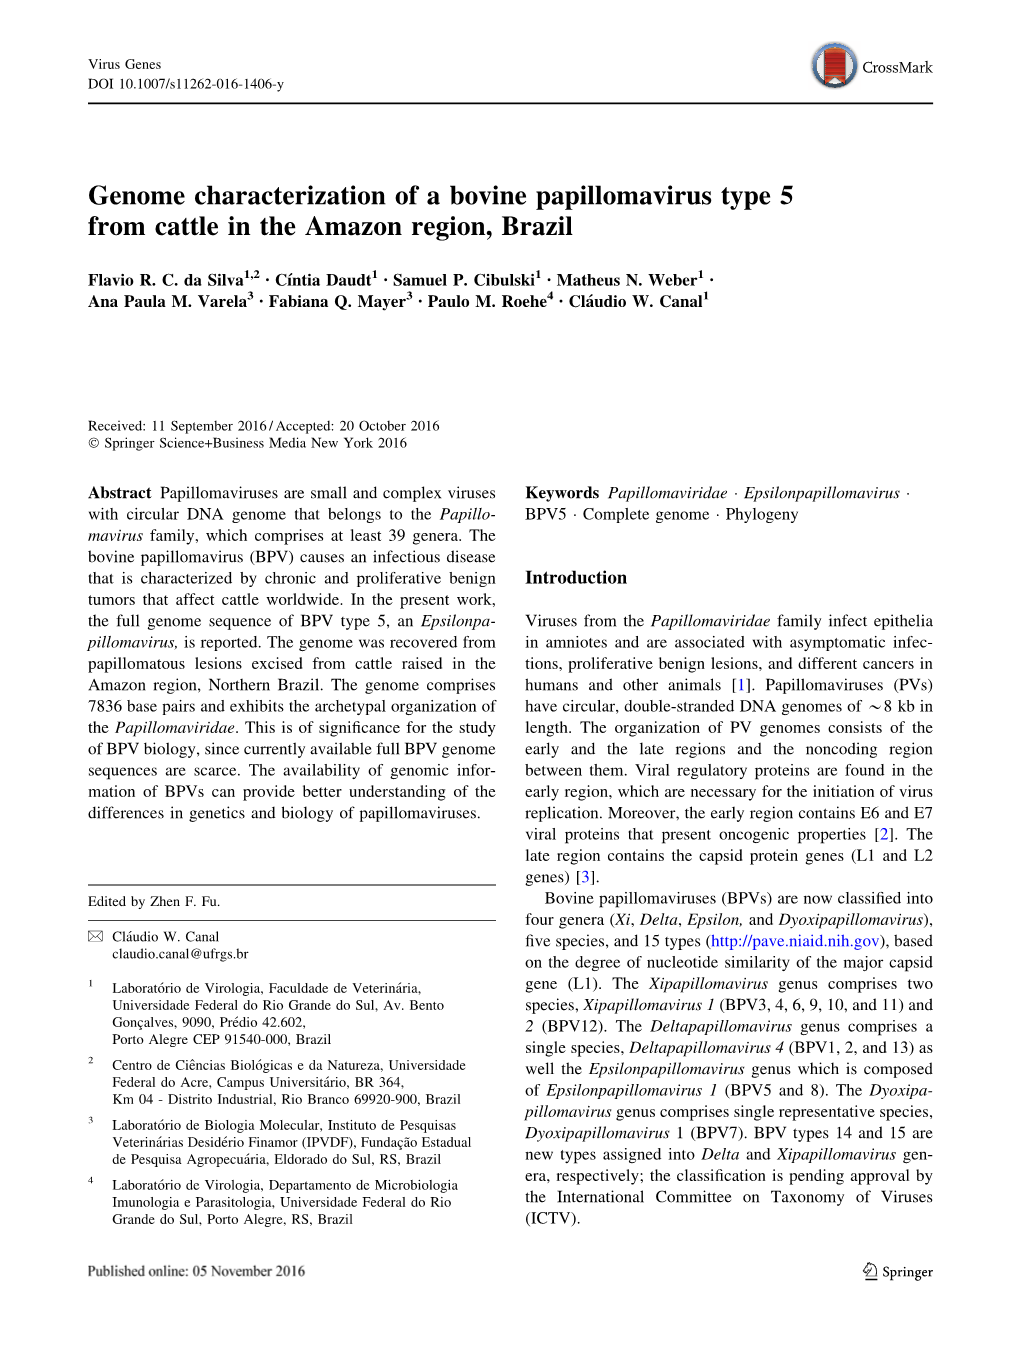 Genome Characterization of a Bovine Papillomavirus Type 5 from Cattle in the Amazon Region, Brazil